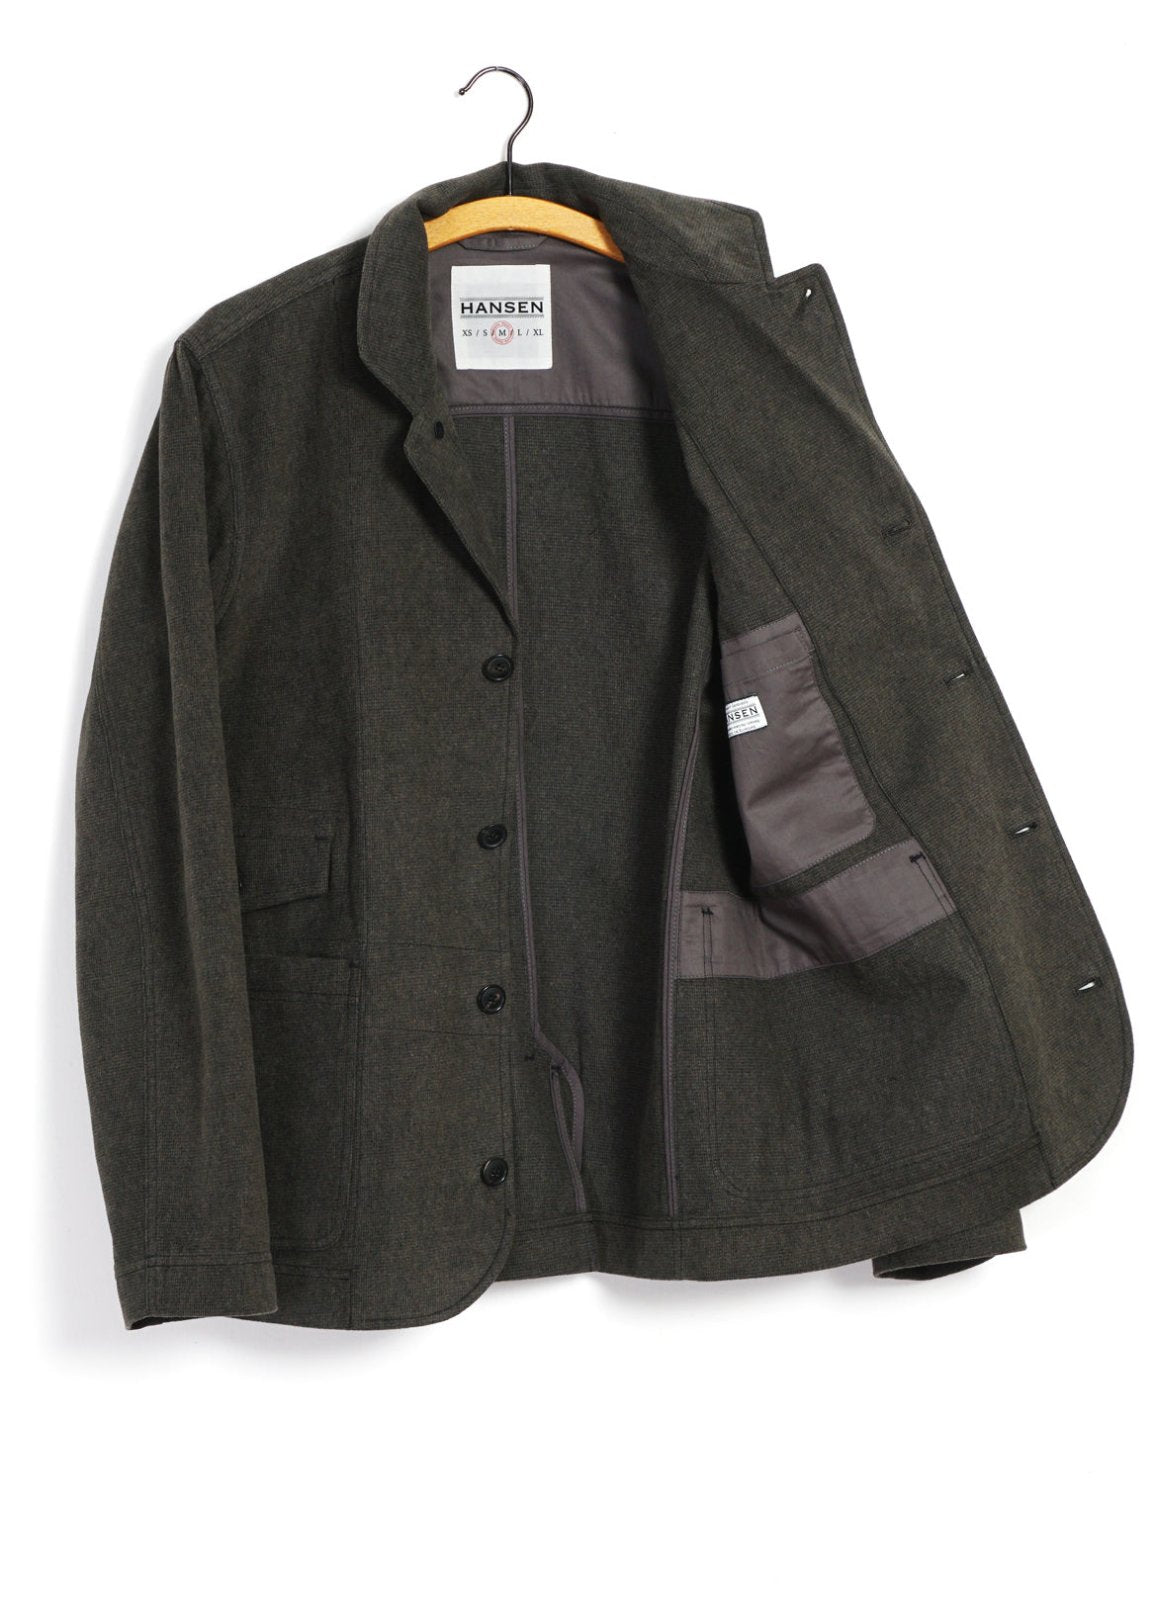 JASPER | Casual Everyday Jacket Blazer | Greenish | HANSEN Garments